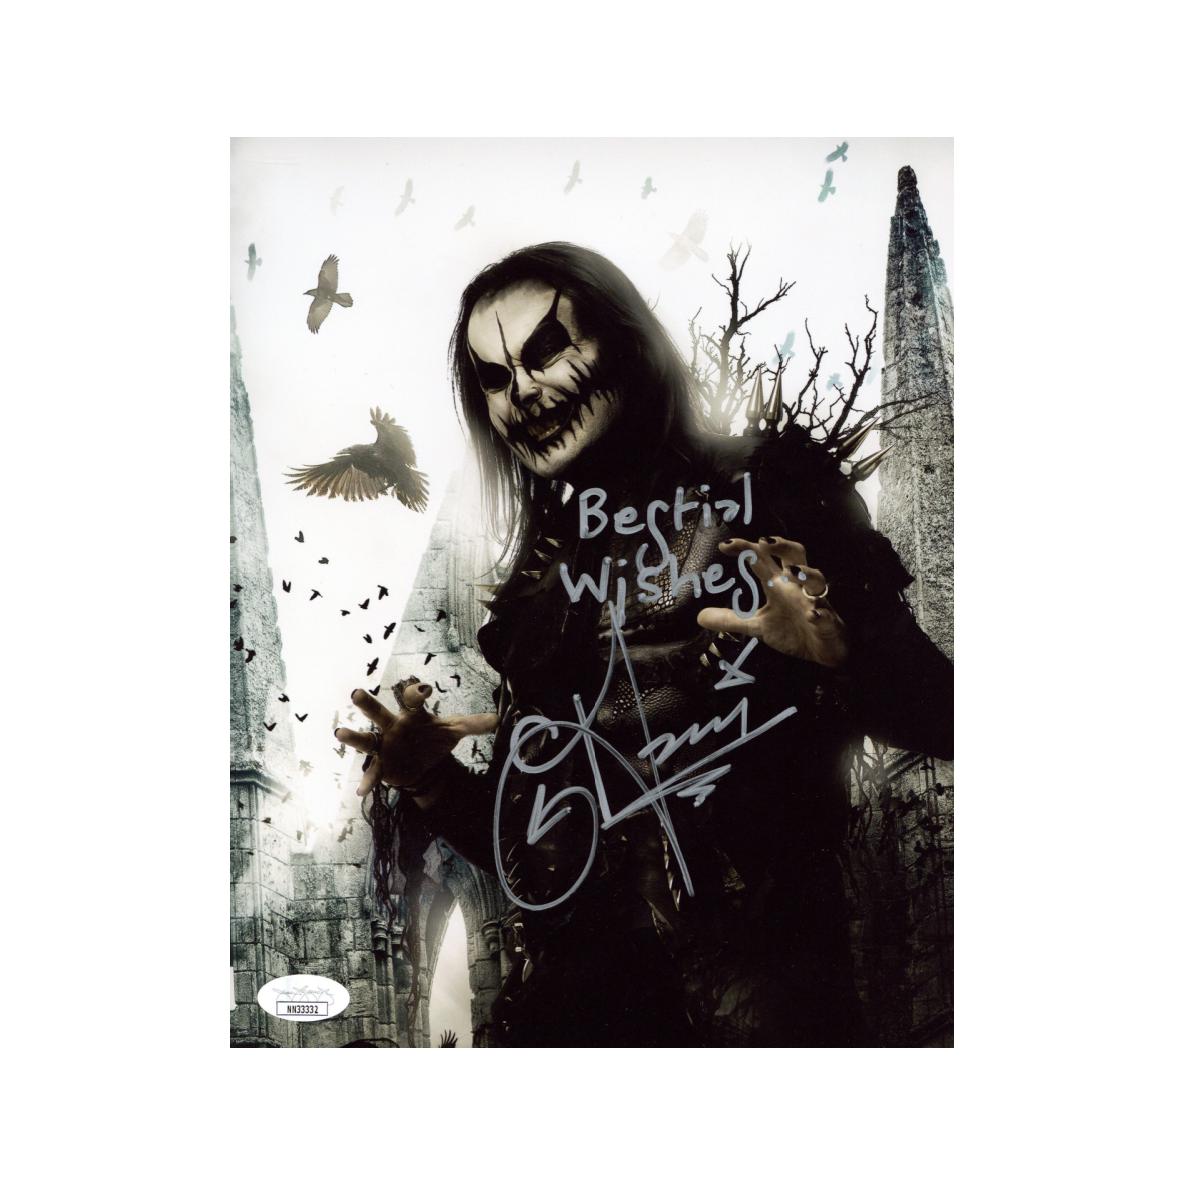 Dani Filth Signed 8x10 Photo Cradle of Filth Autographed JSA COA